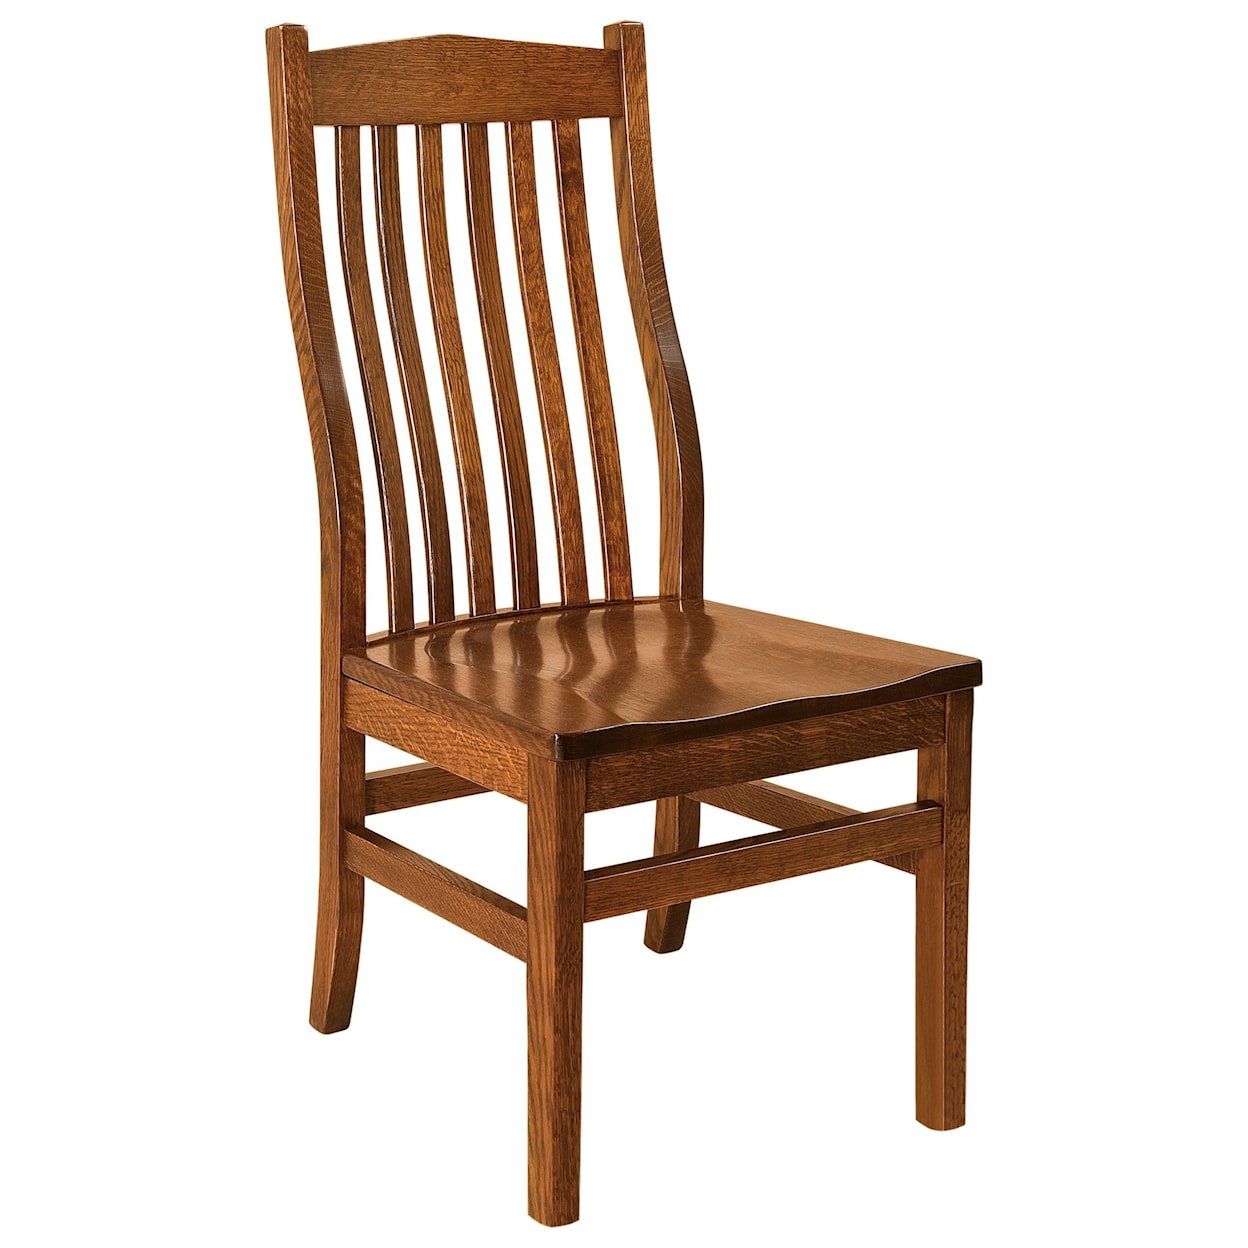 F&N Woodworking Sullivan Side Chair - Wood Seat